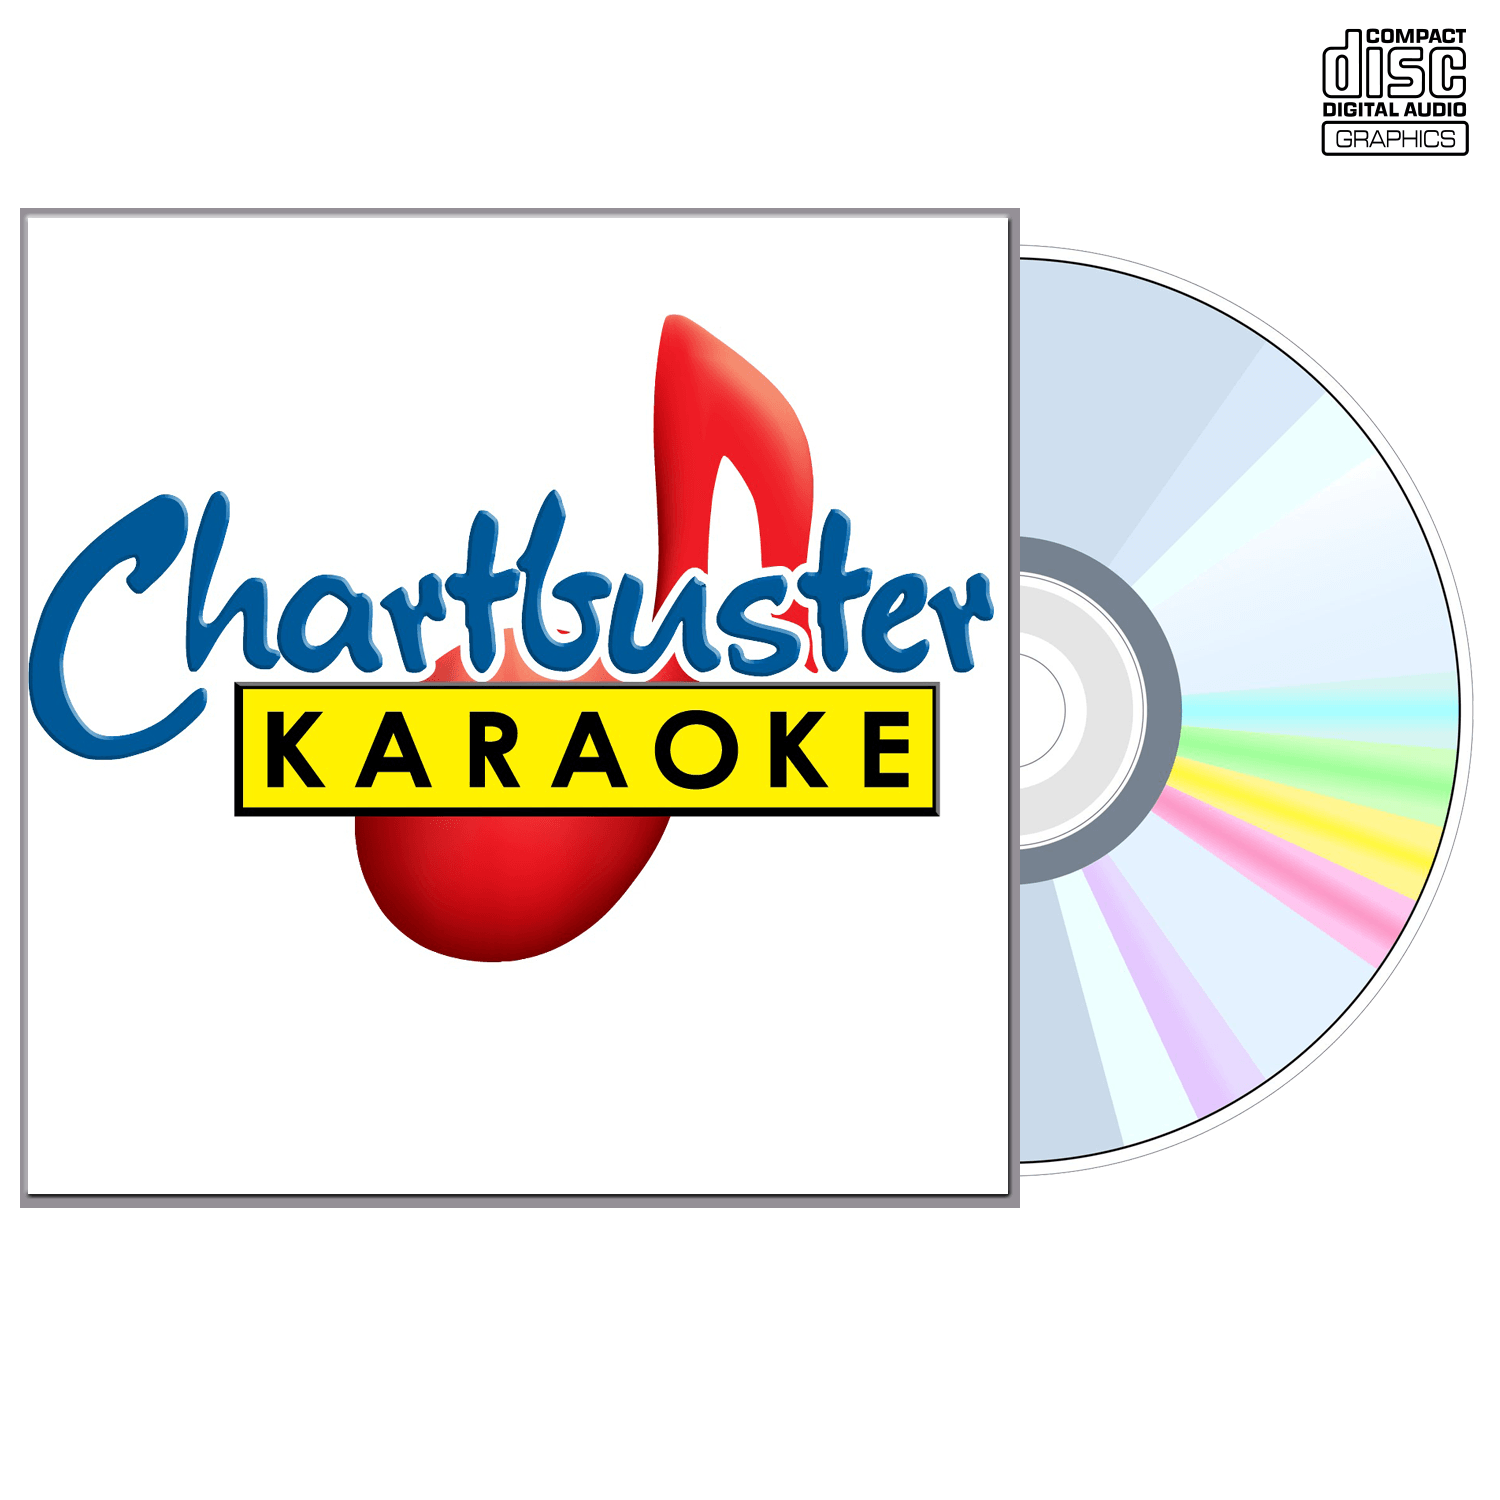 Patty Loveless Vol 3 - CD+G - Chartbuster Karaoke - Karaoke Home Entertainment